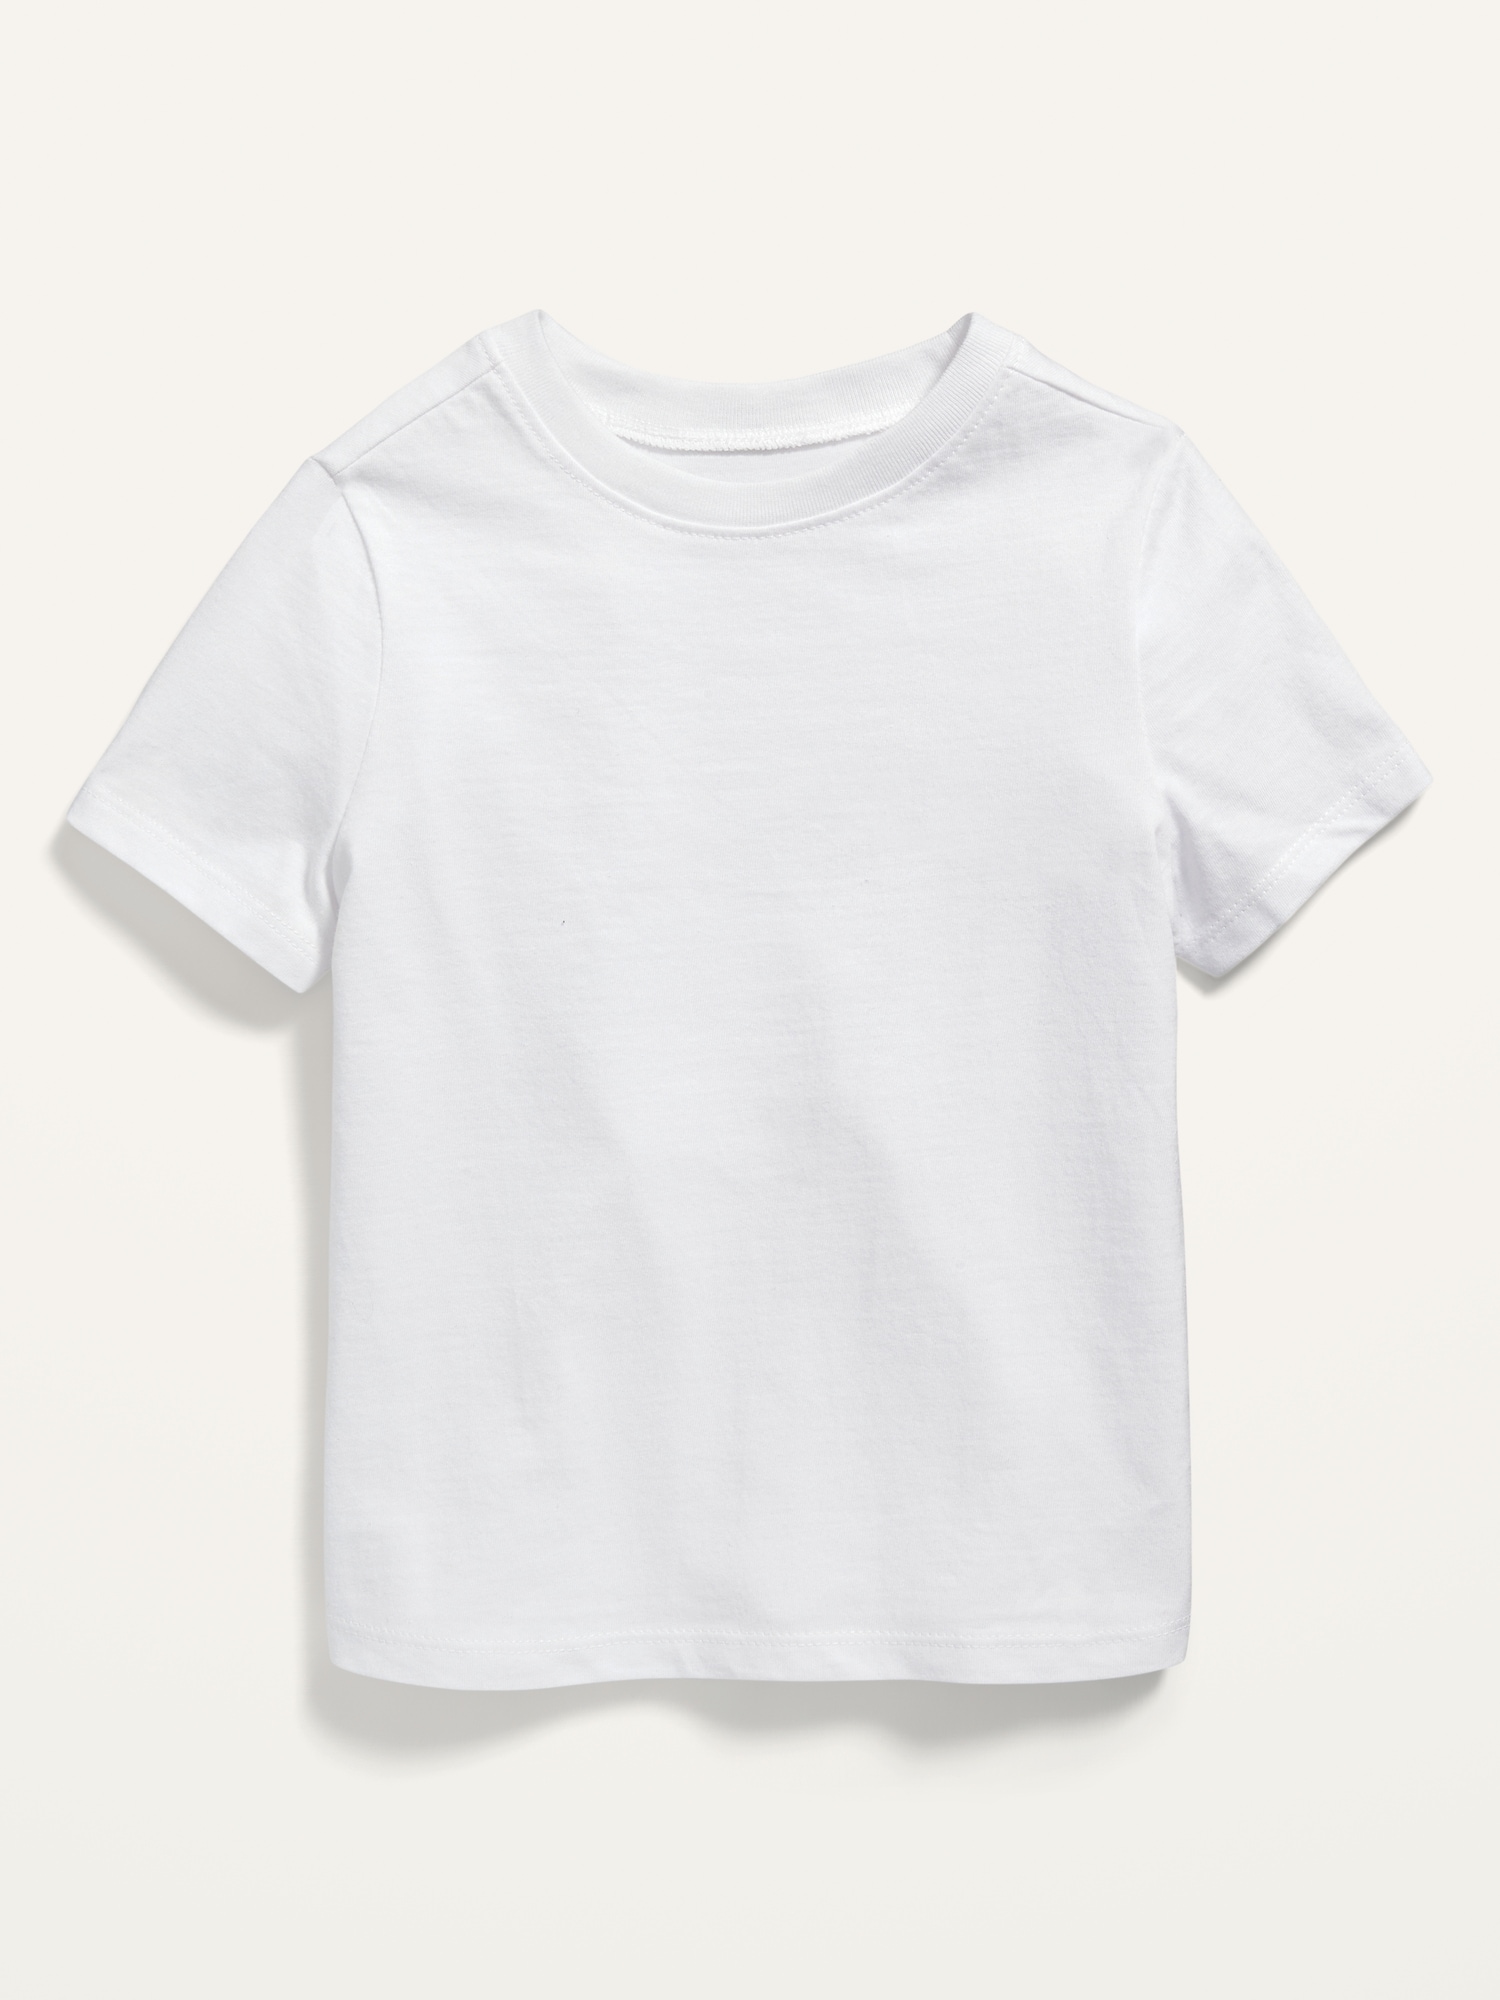 Unisex Crew-Neck T-Shirt for Toddler Hot Deal